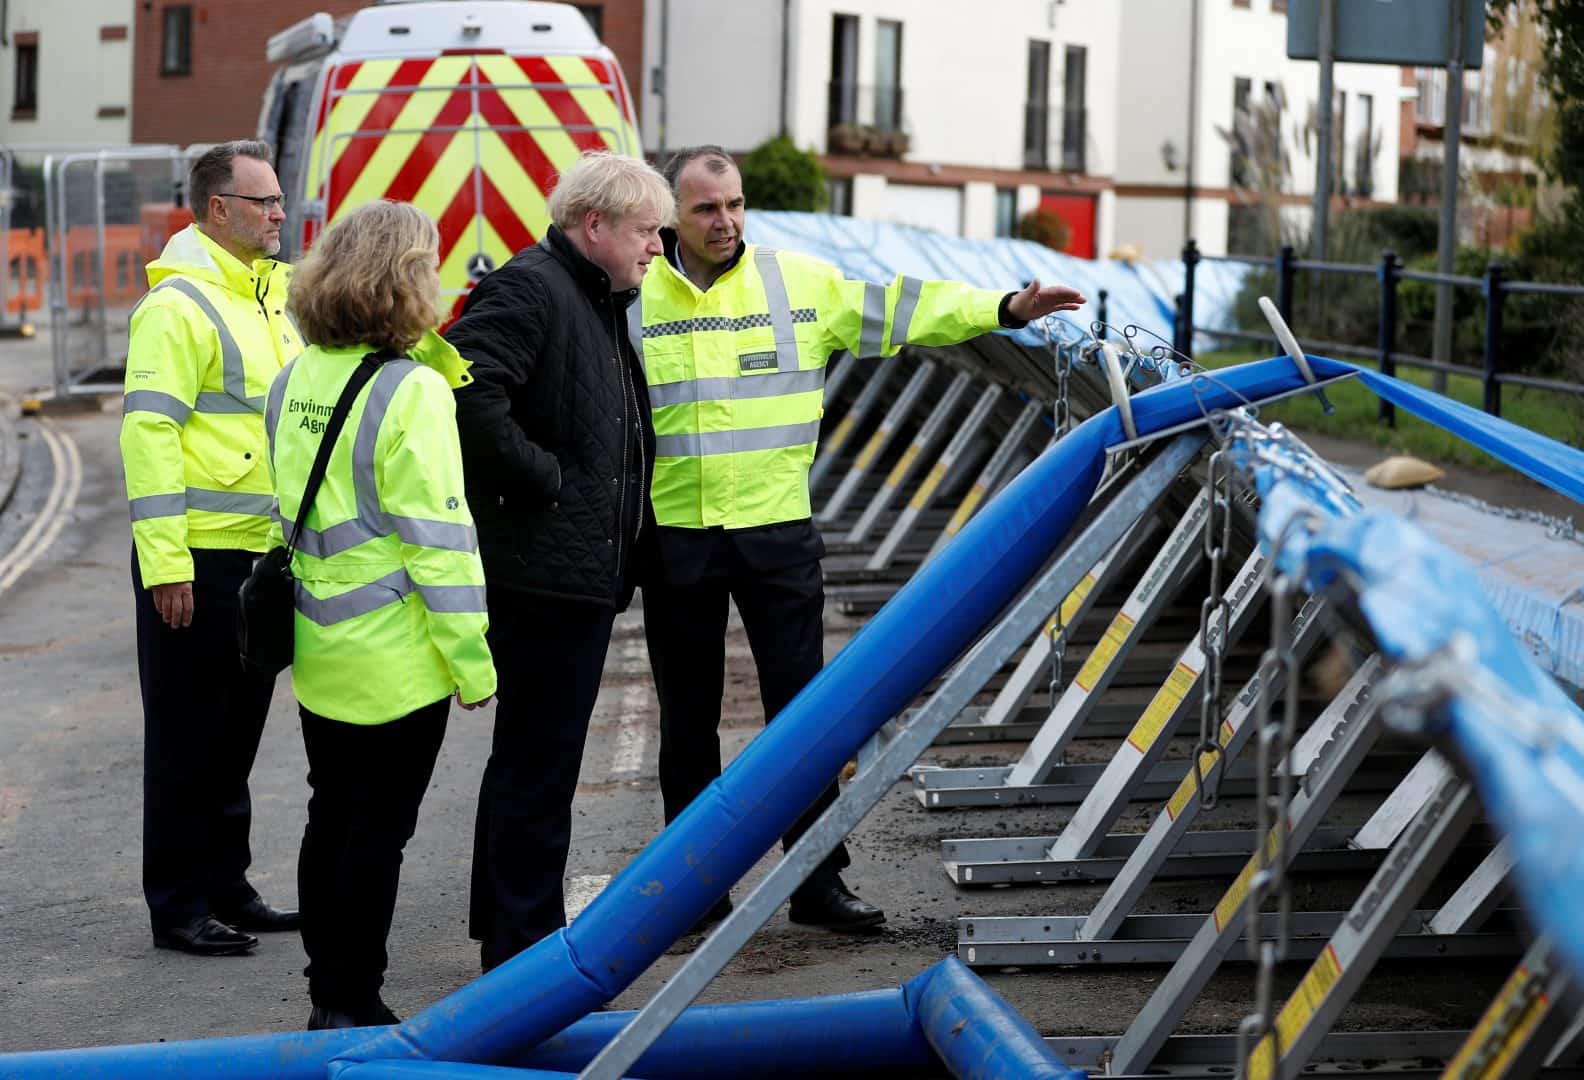 Boris Johnson branded ‘traitor’ as he visits flood-hit town